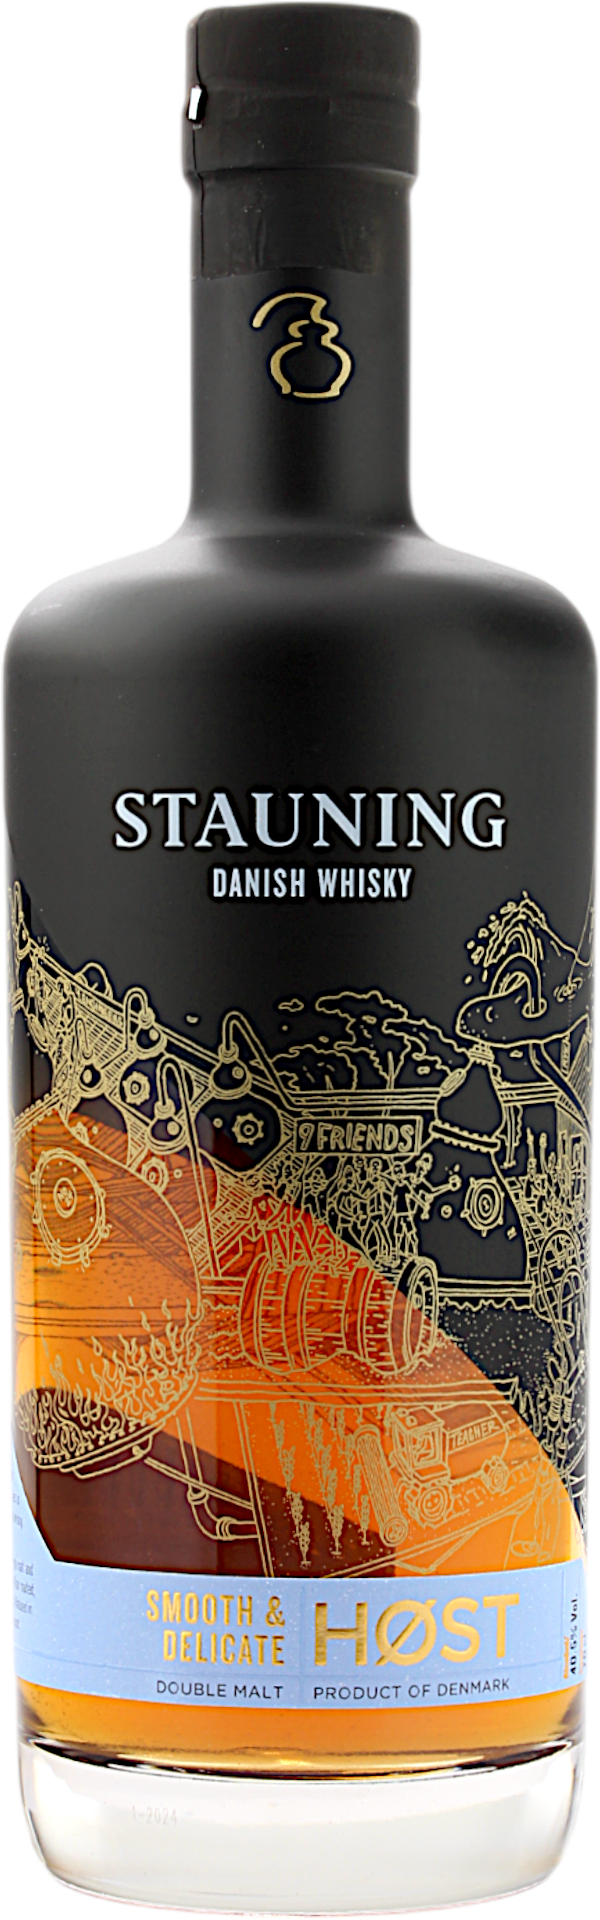 Stauning Høst Danish Whisky 40.5% 0,7l